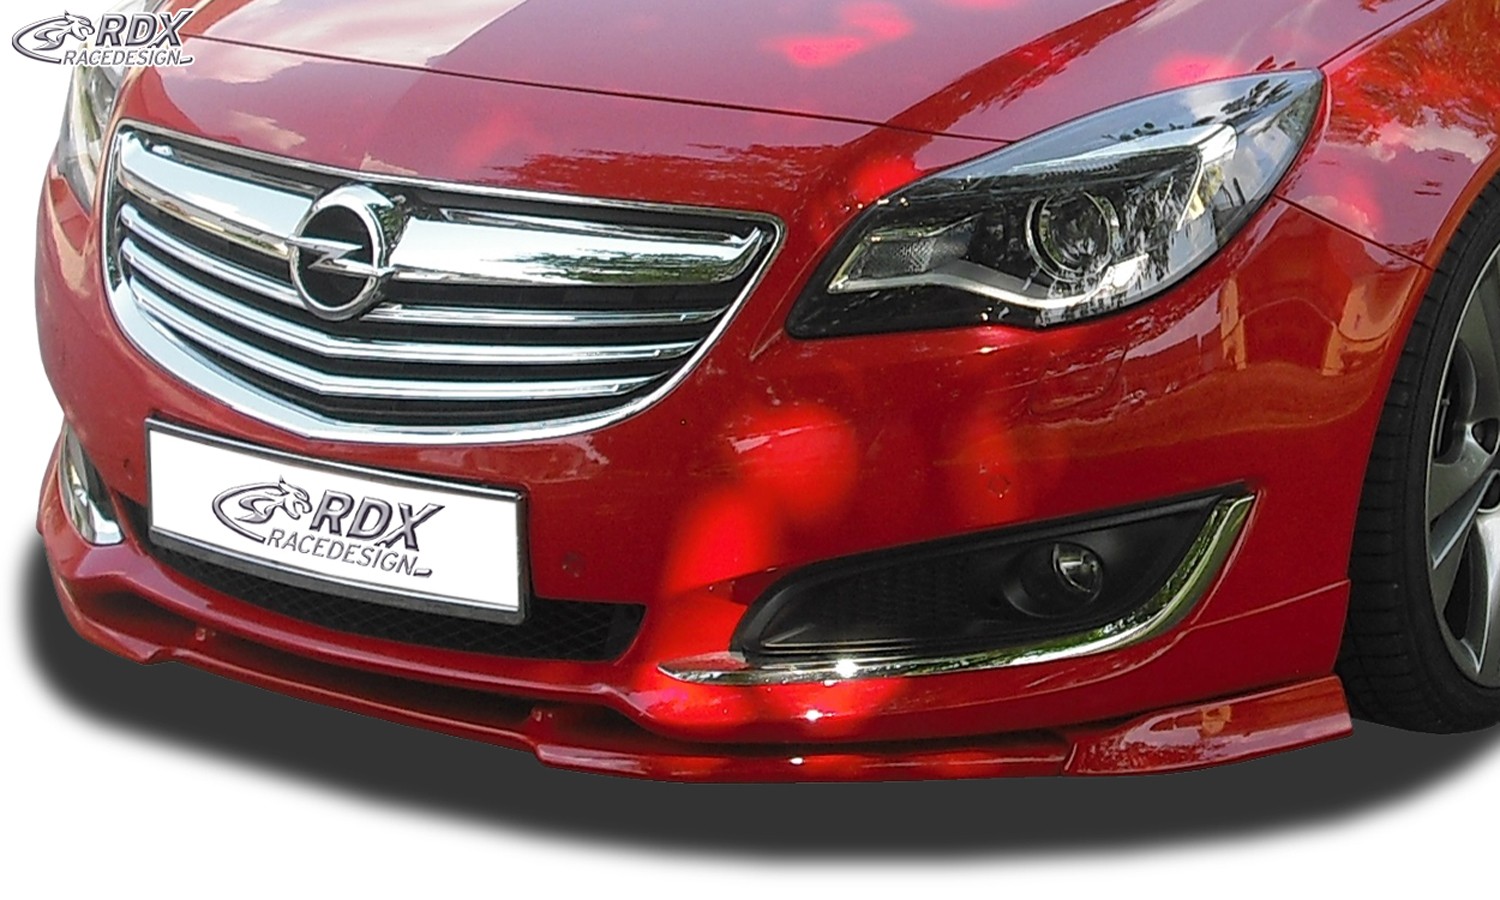 VARIO-X Frontspoiler Opel Insignia (OPC-Line) (ab 2013) (Passend an Fahrzeuge mit OPC-Line Frontansatz) Frontansatz